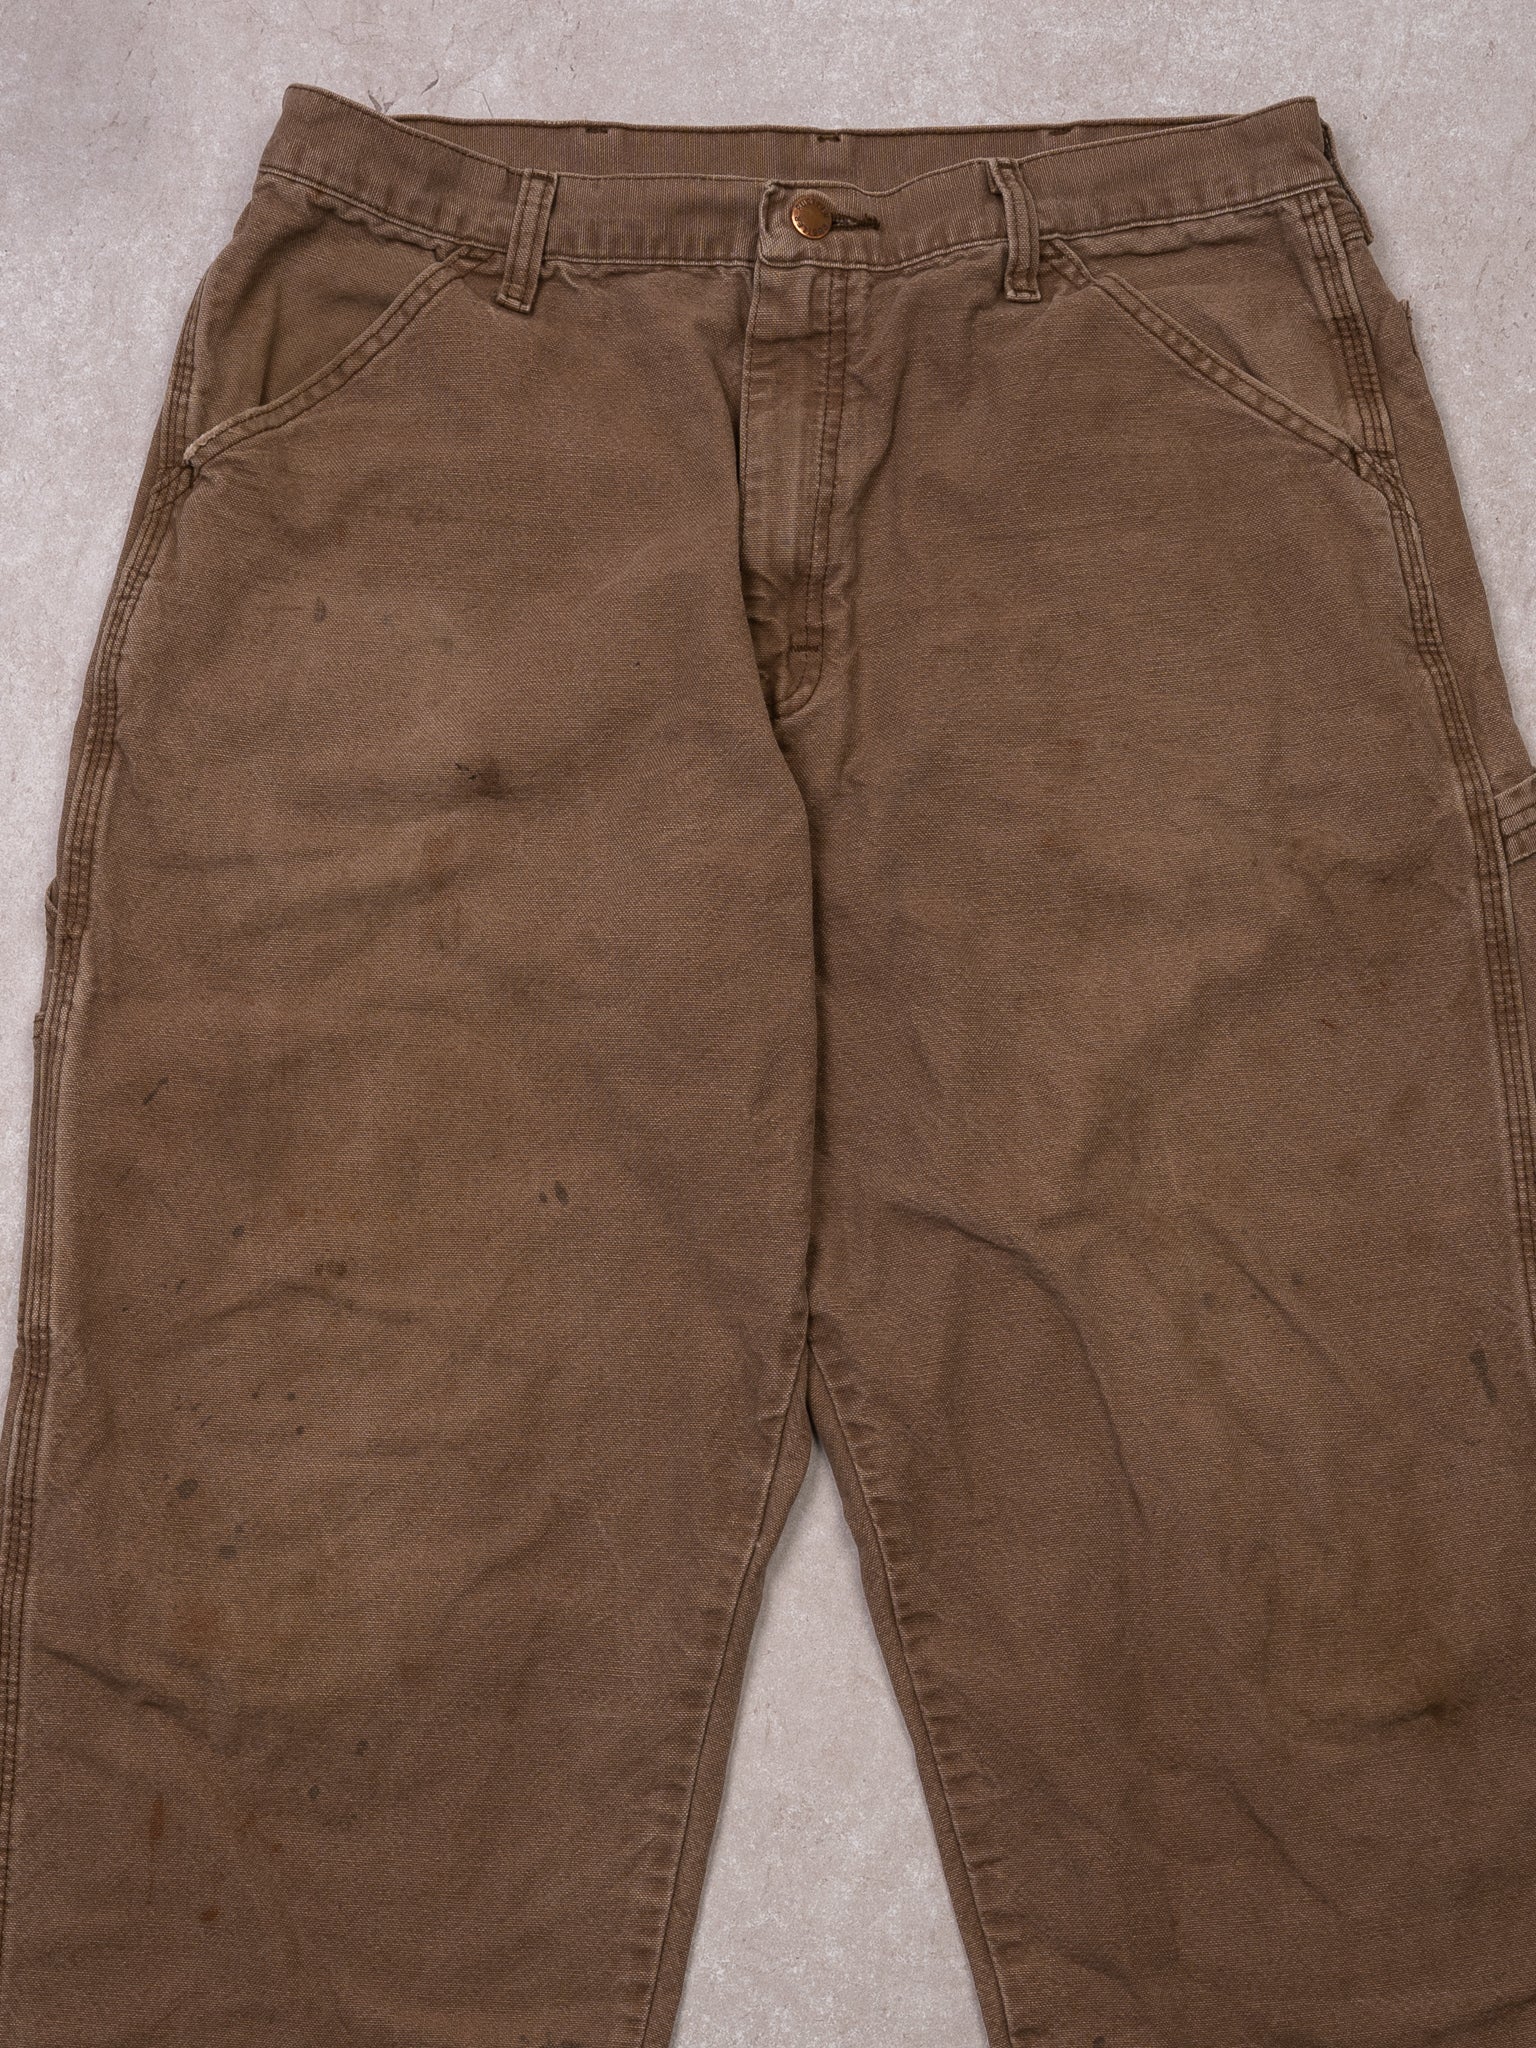 Vintage Washed Brown Rustler Denim Cargo Pants (32 x 30)